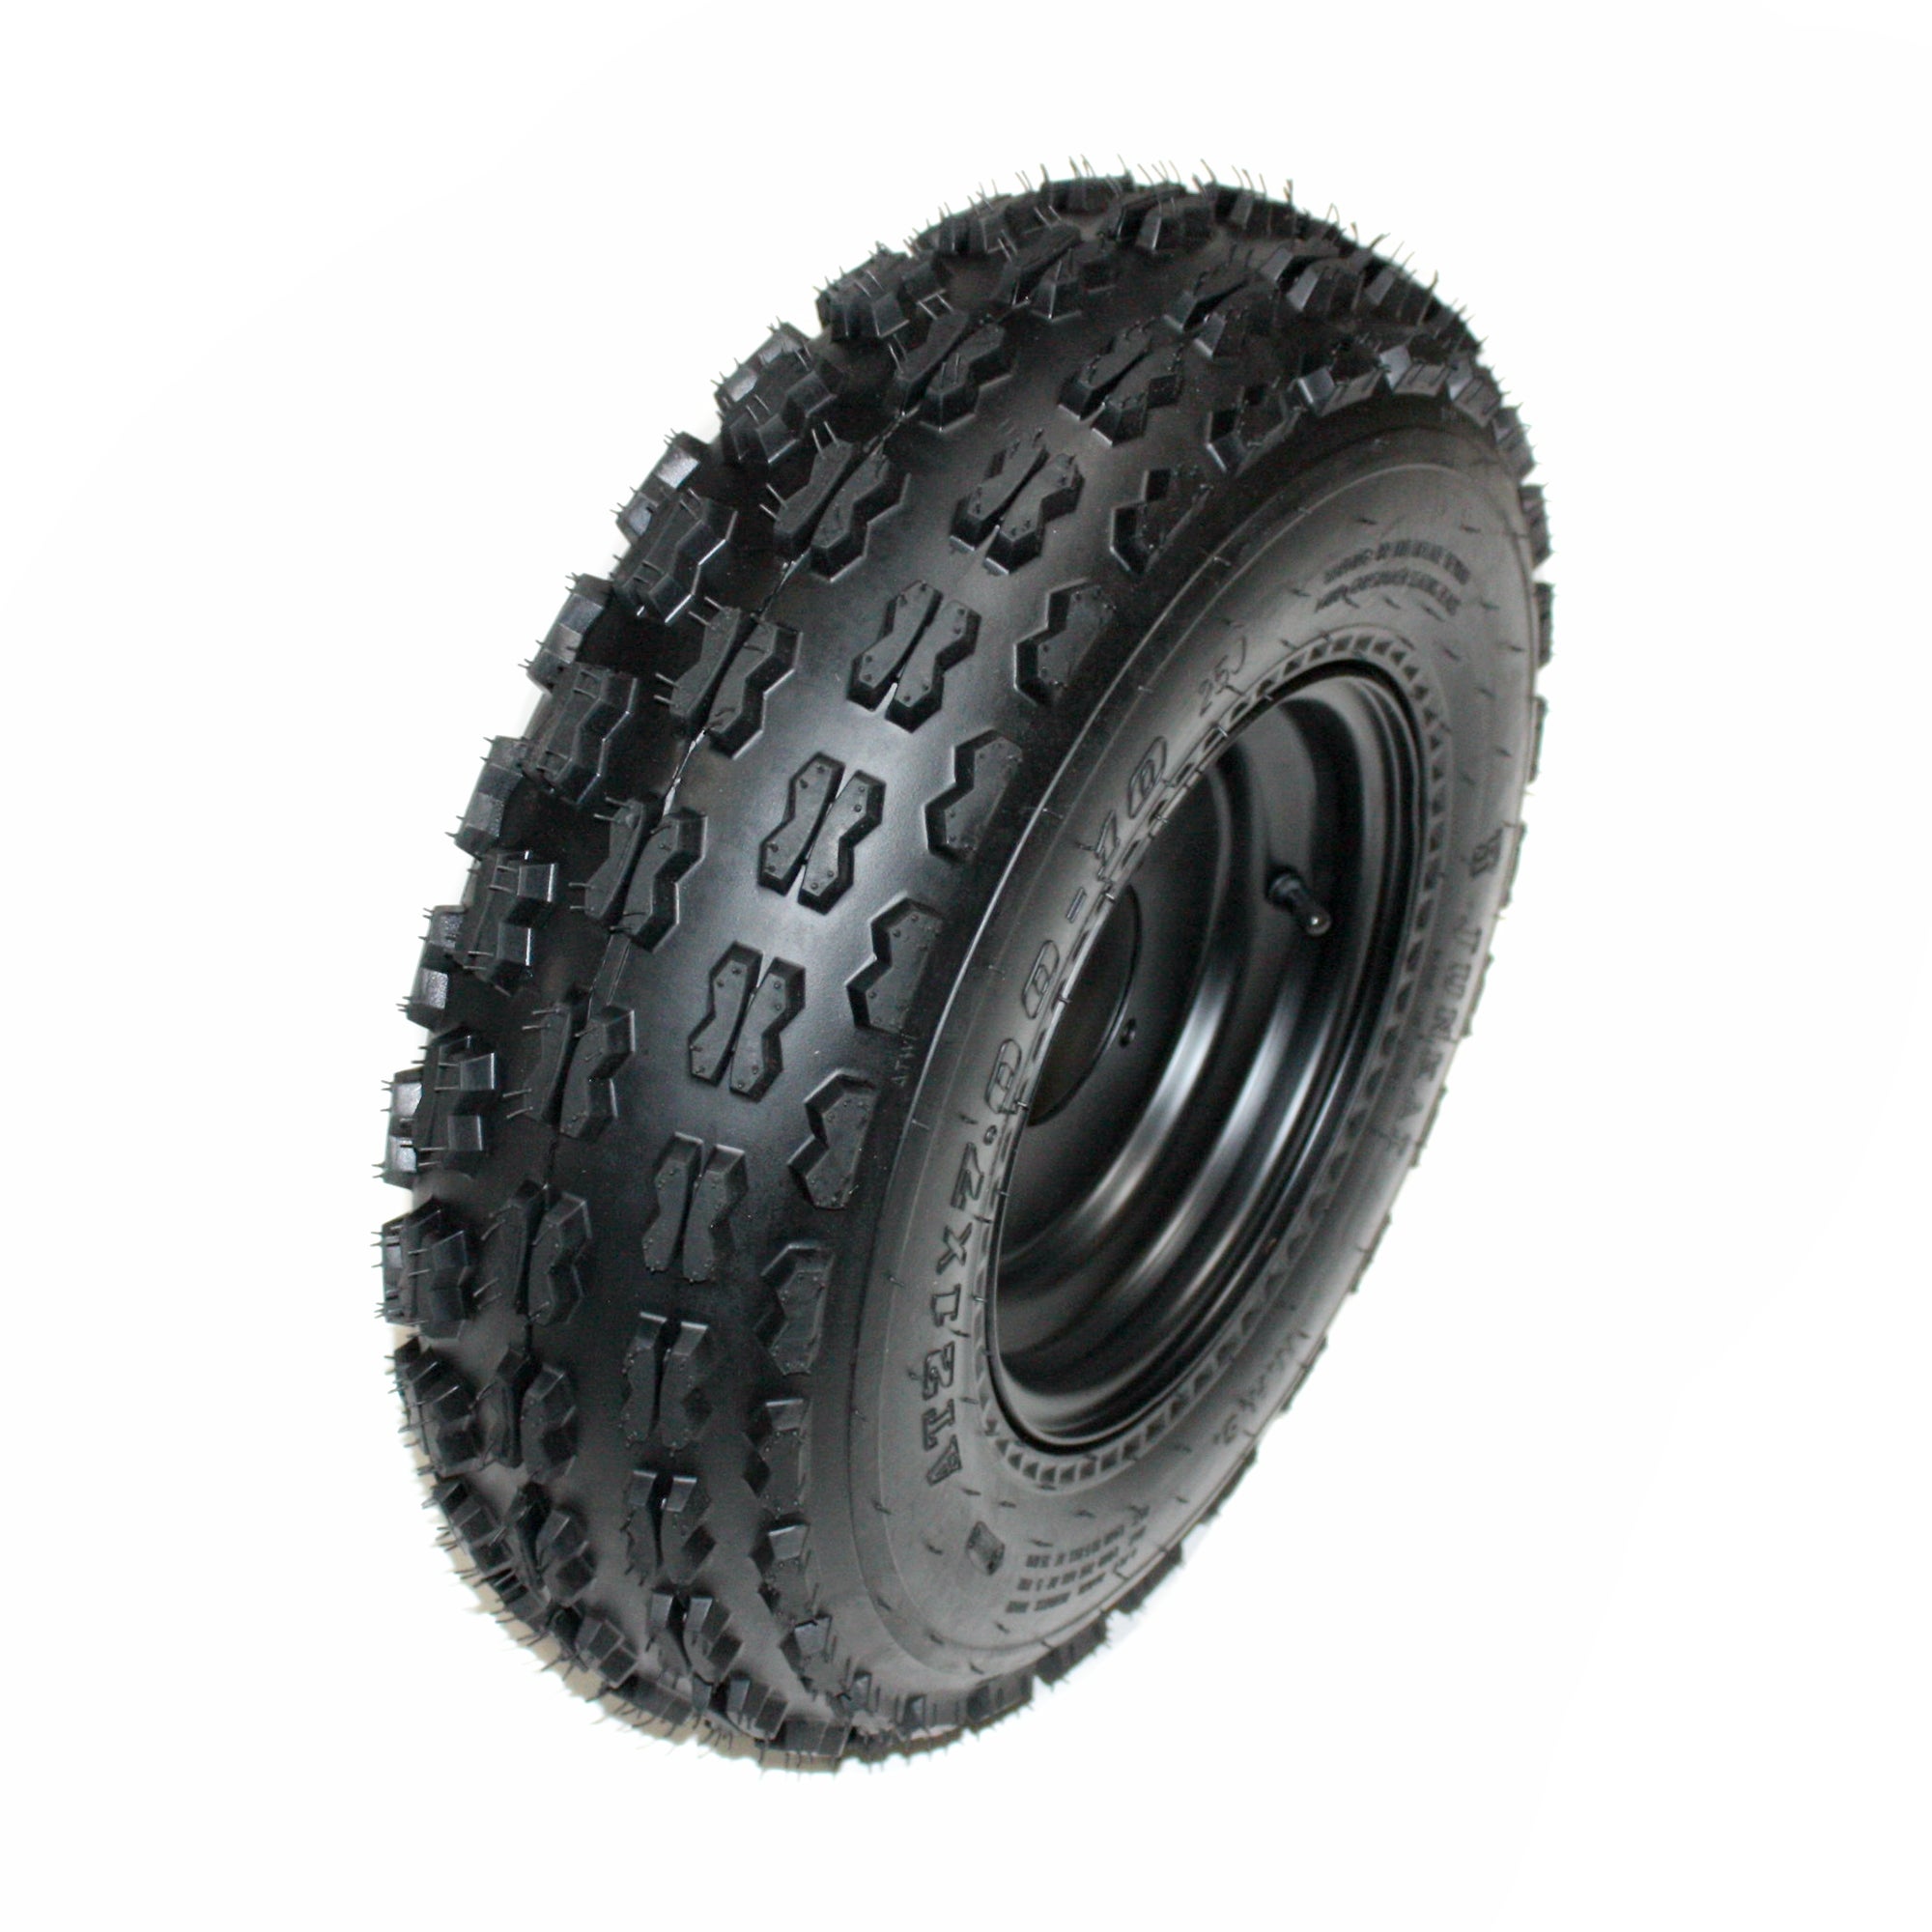 2X 21X7-10 inch Front Wheel Rim Tyre Tire 150cc 250cc Quad Dirt Bike ATV Buggy